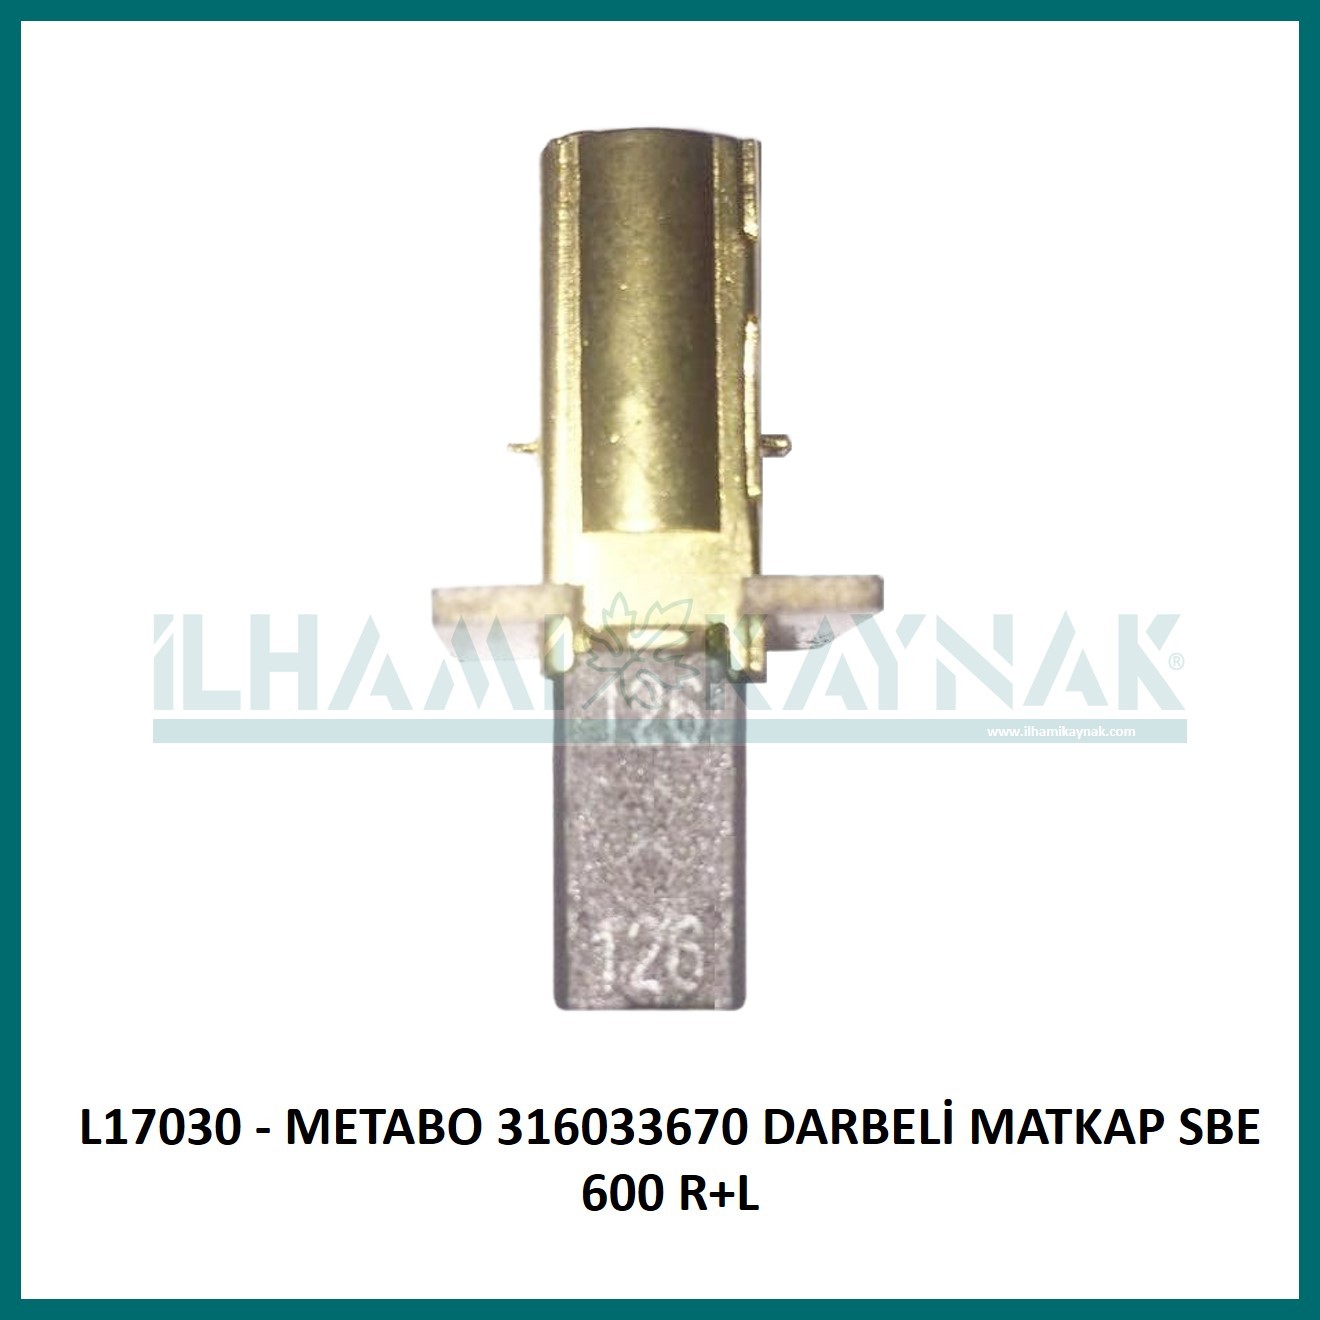 L17030 - METABO 316033670 DARBELİ MATKAP SBE 600 R+L  - 5*8*14 mm - 100 Adet